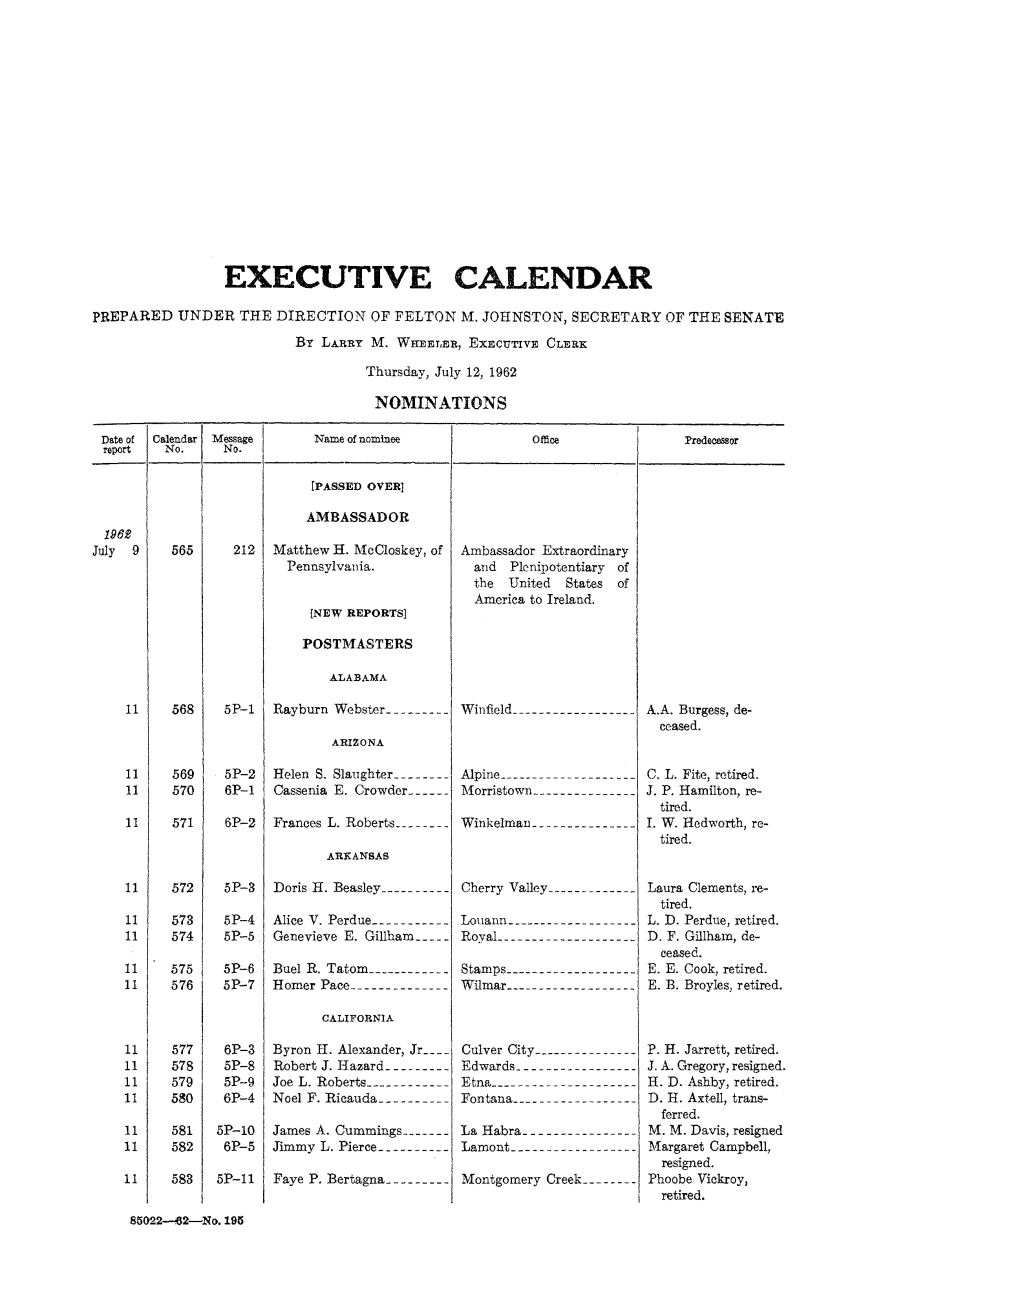 Executive Calendar Prepared Under the Direction of Felton M